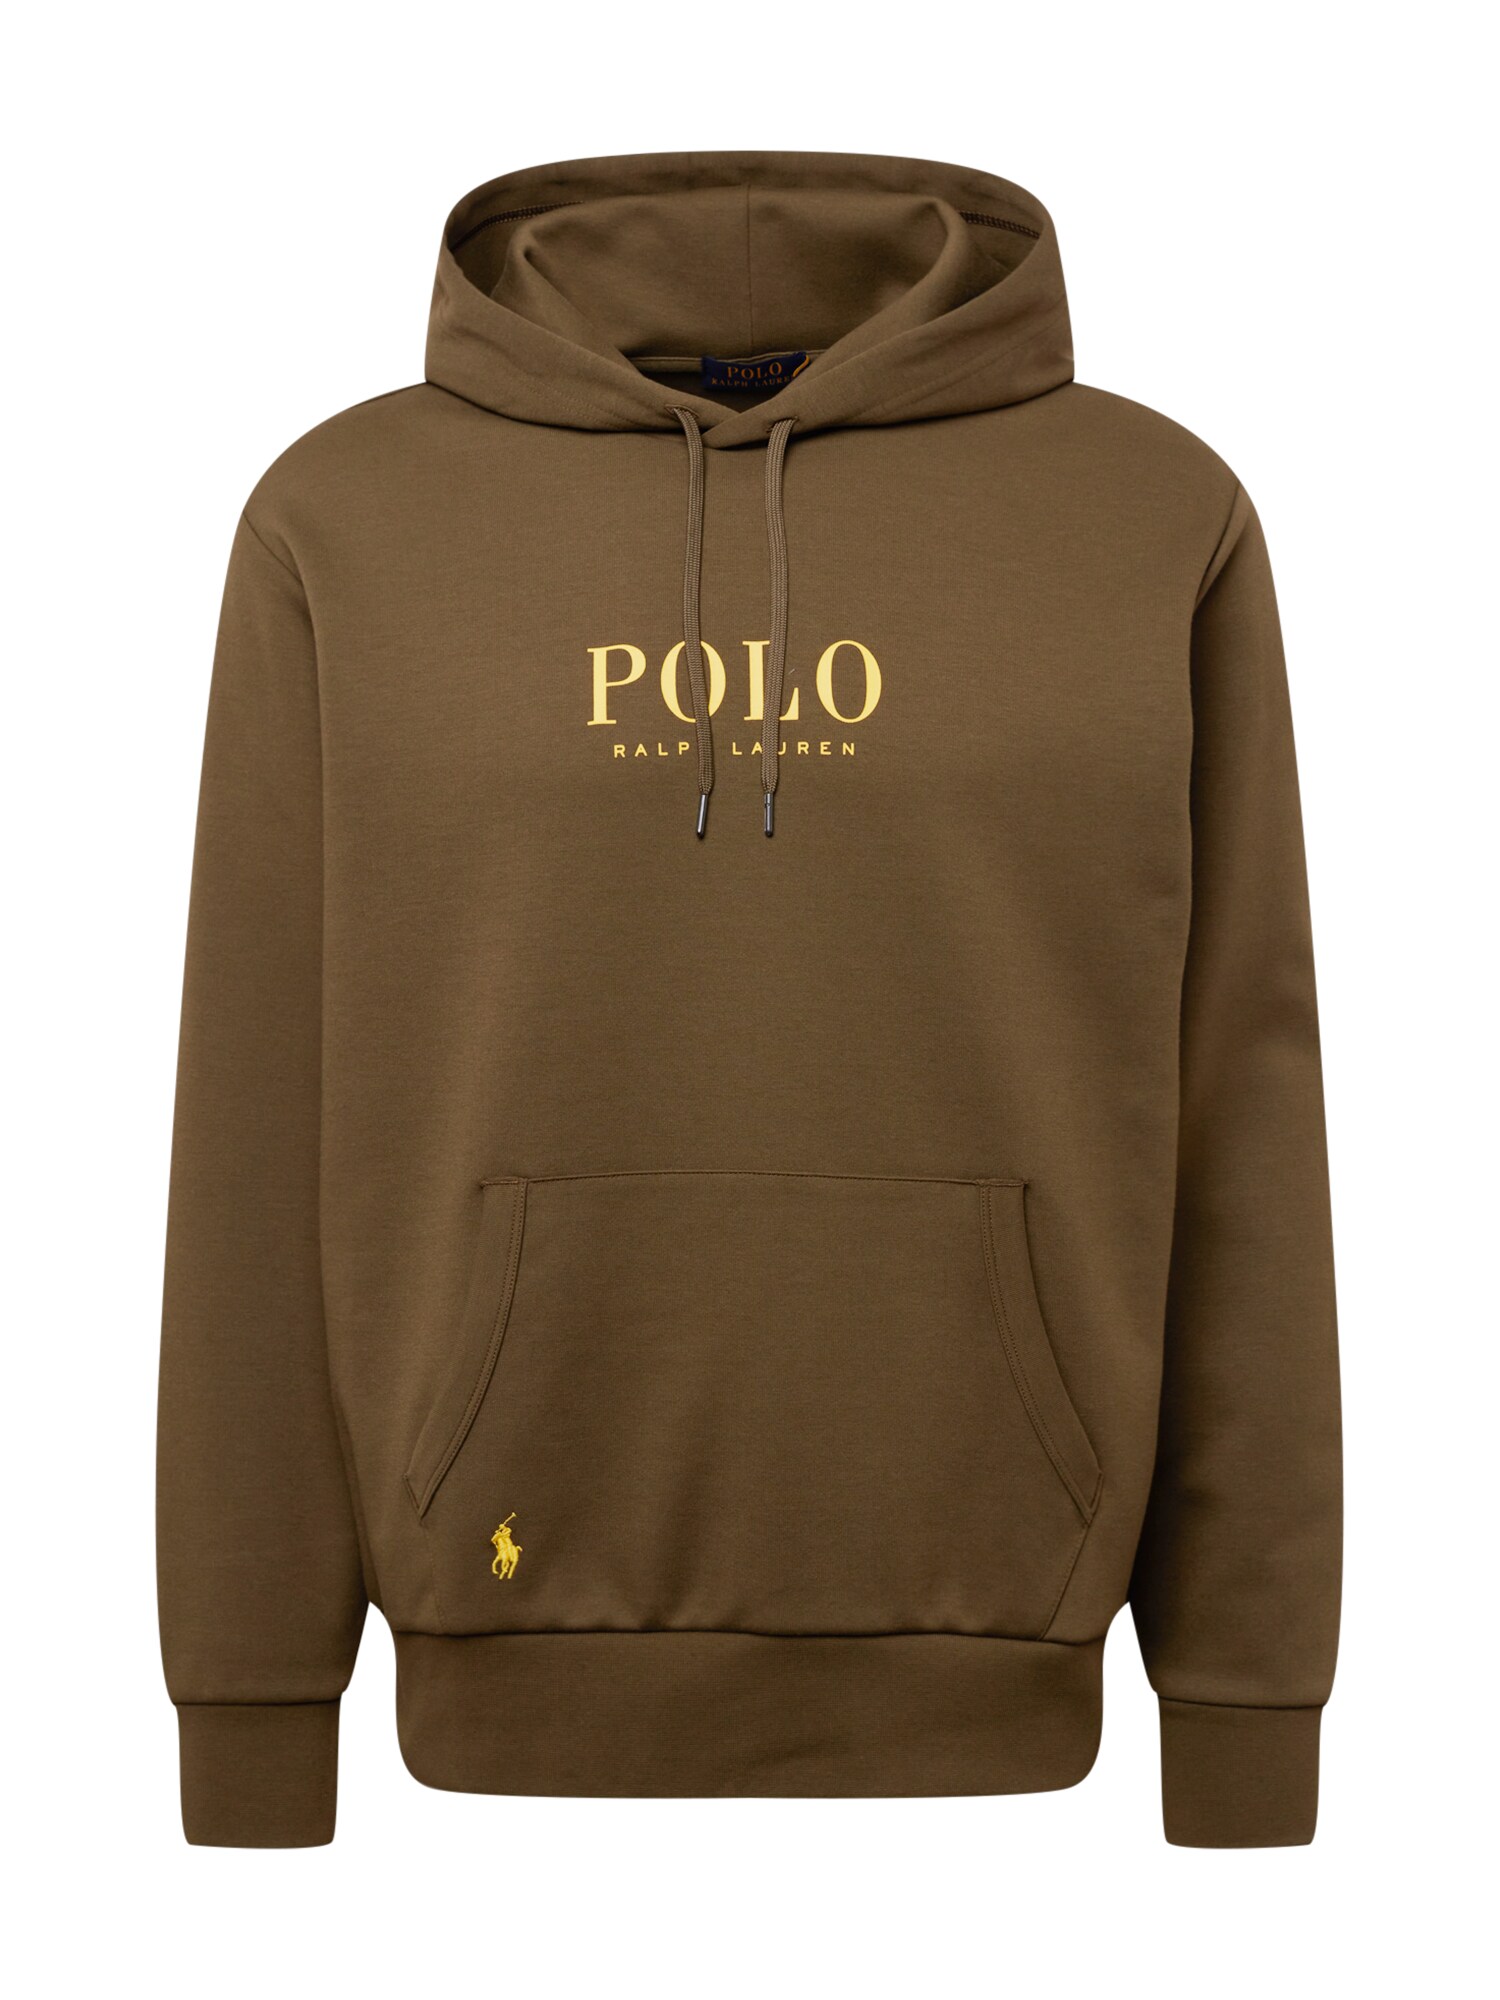 Polo Ralph Lauren Sweatshirt khaki / gelb